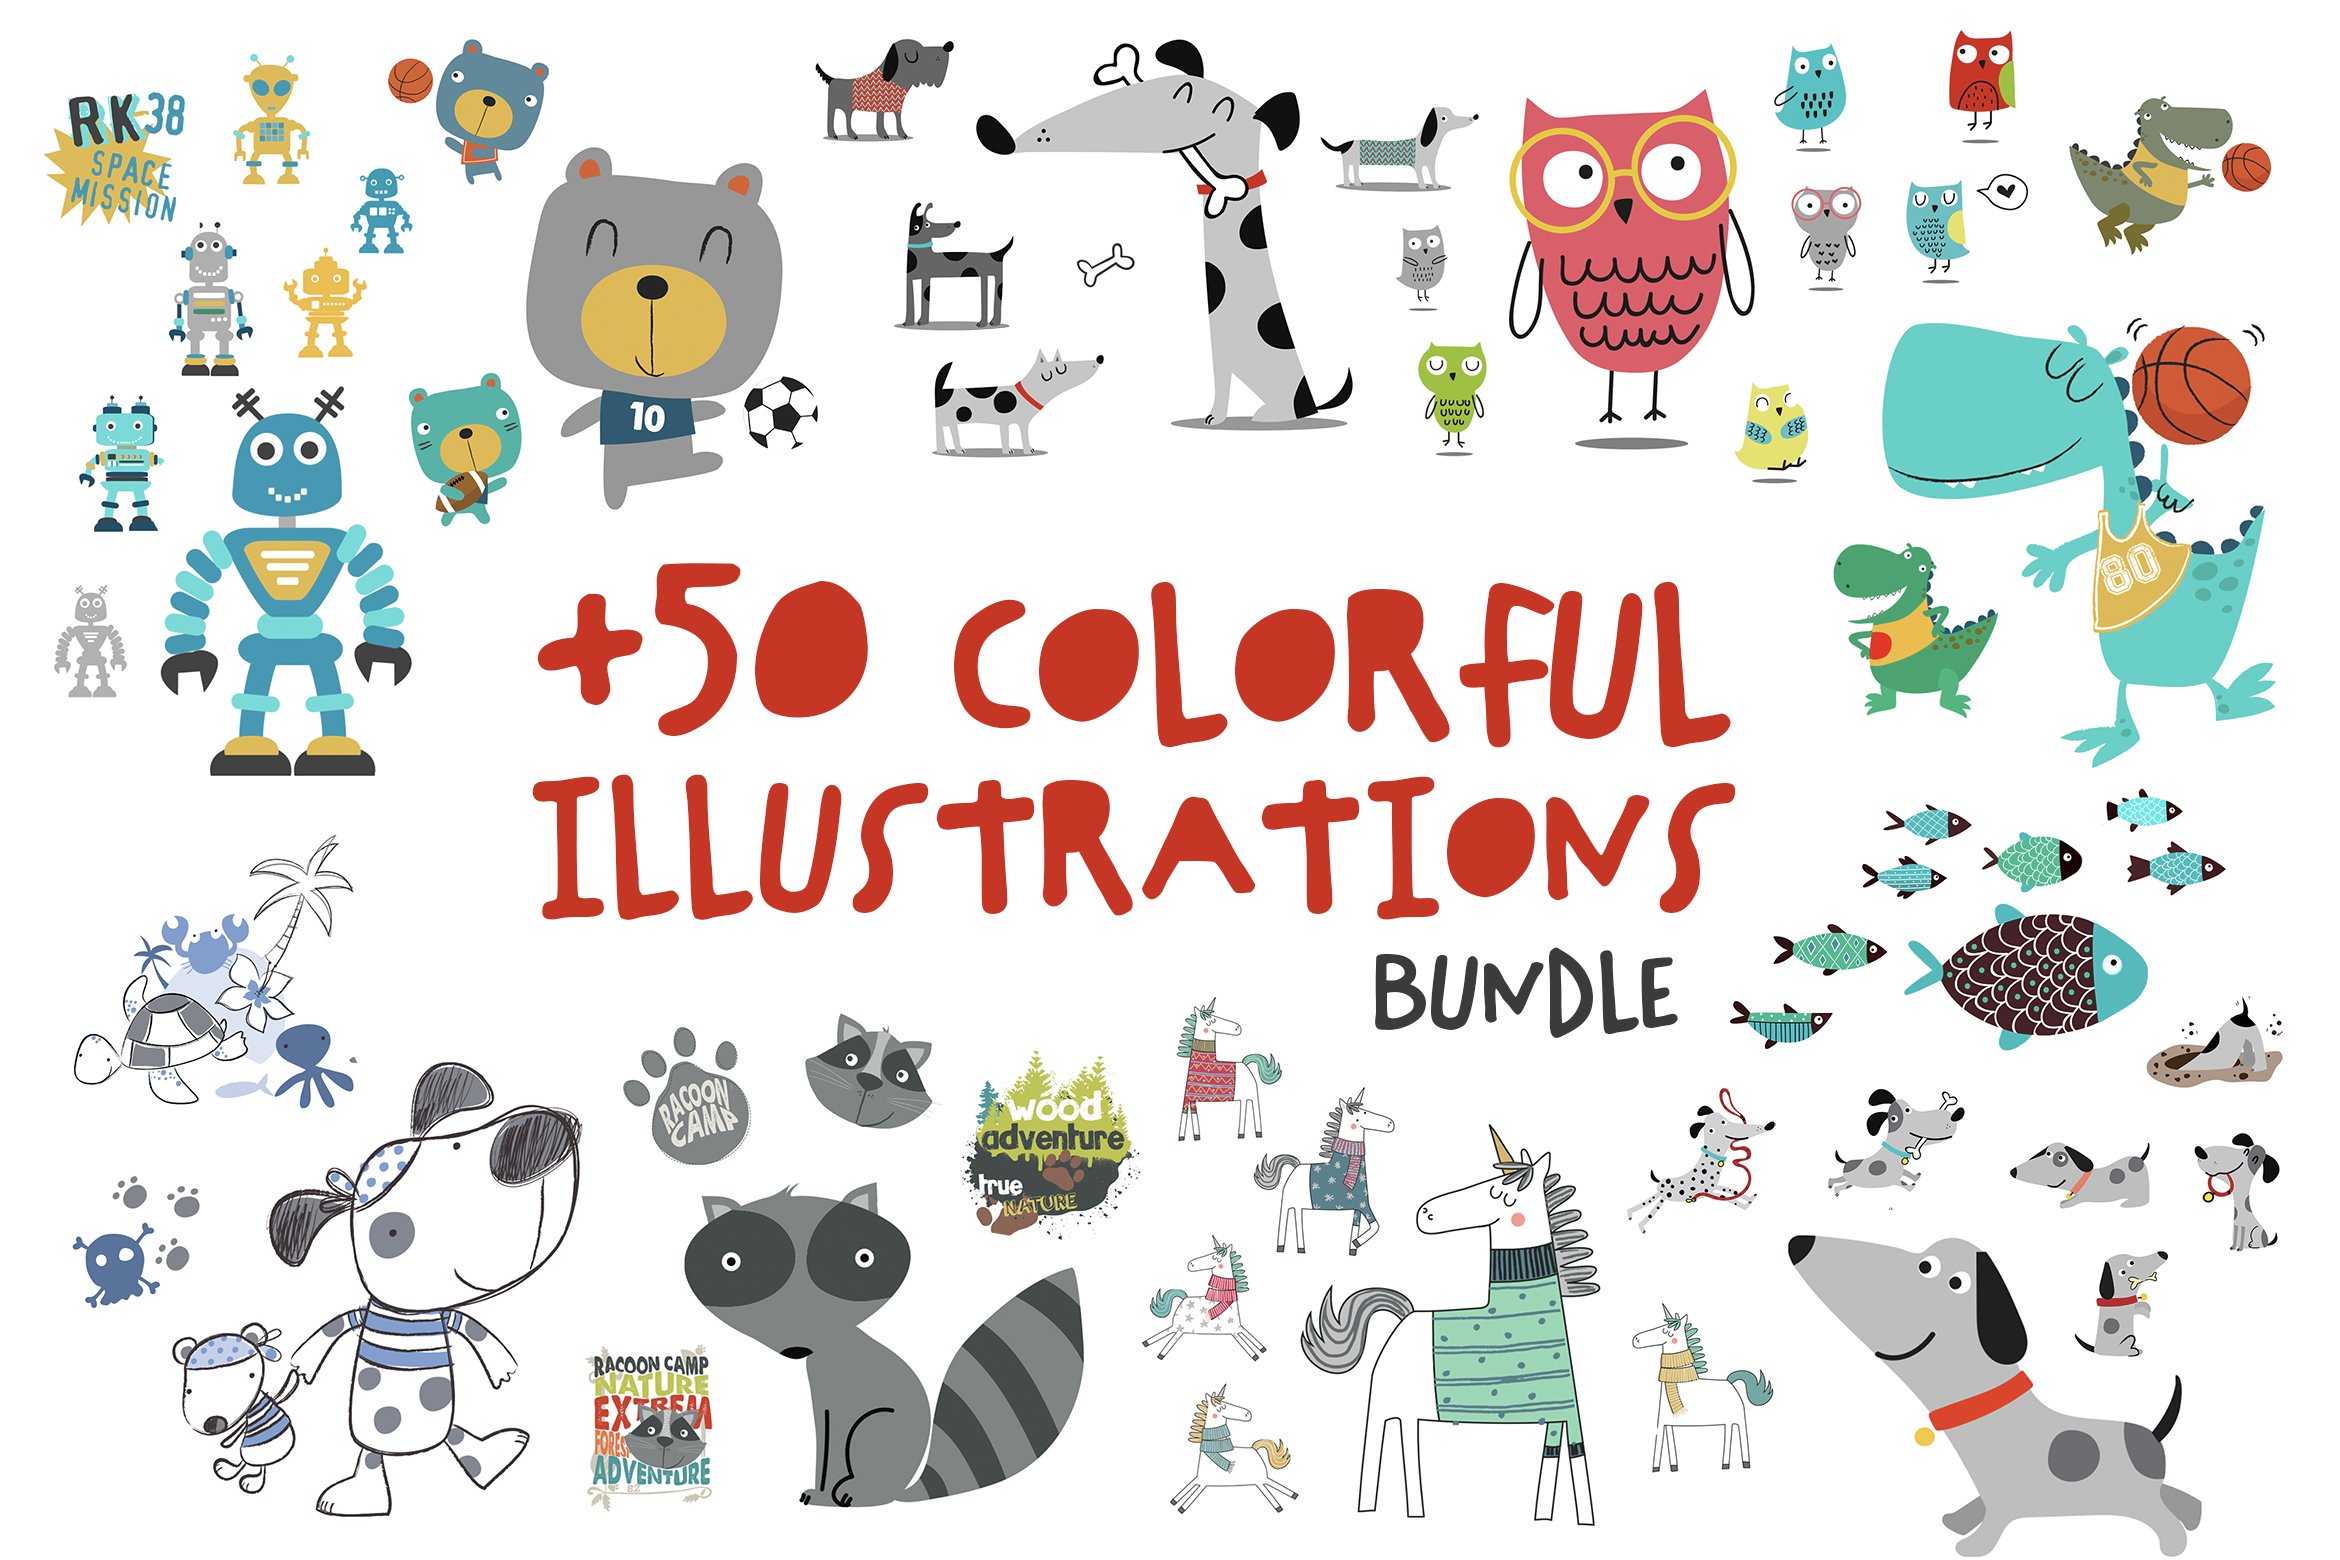 Colorful Illustrations Bundle x50 cover image.